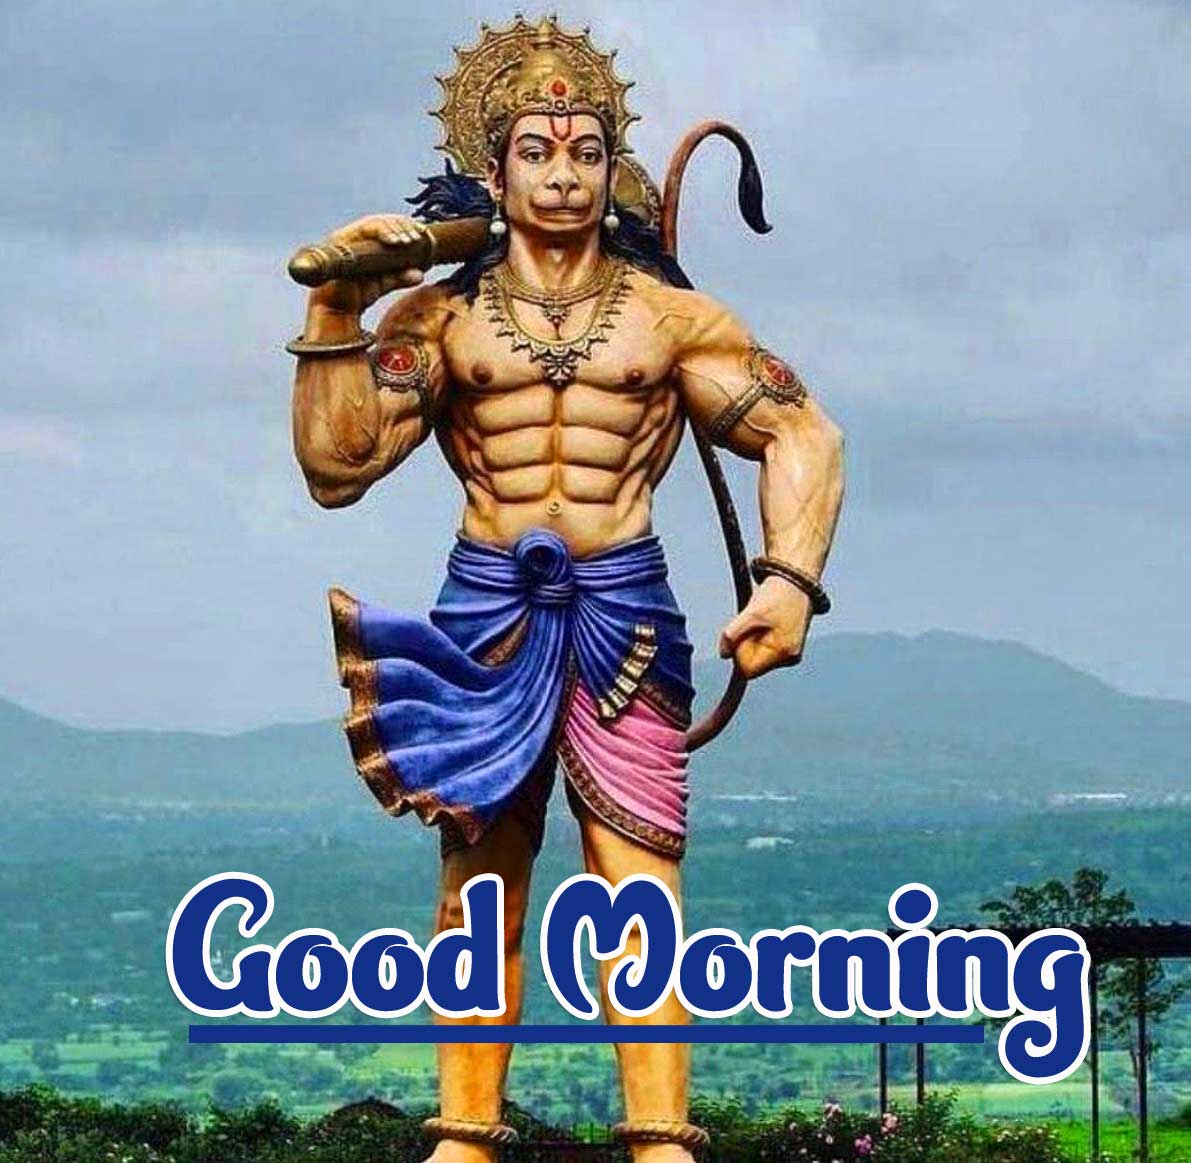 Good Morning Shubh Shanivar Hanuman Ji Images pics Free Download 